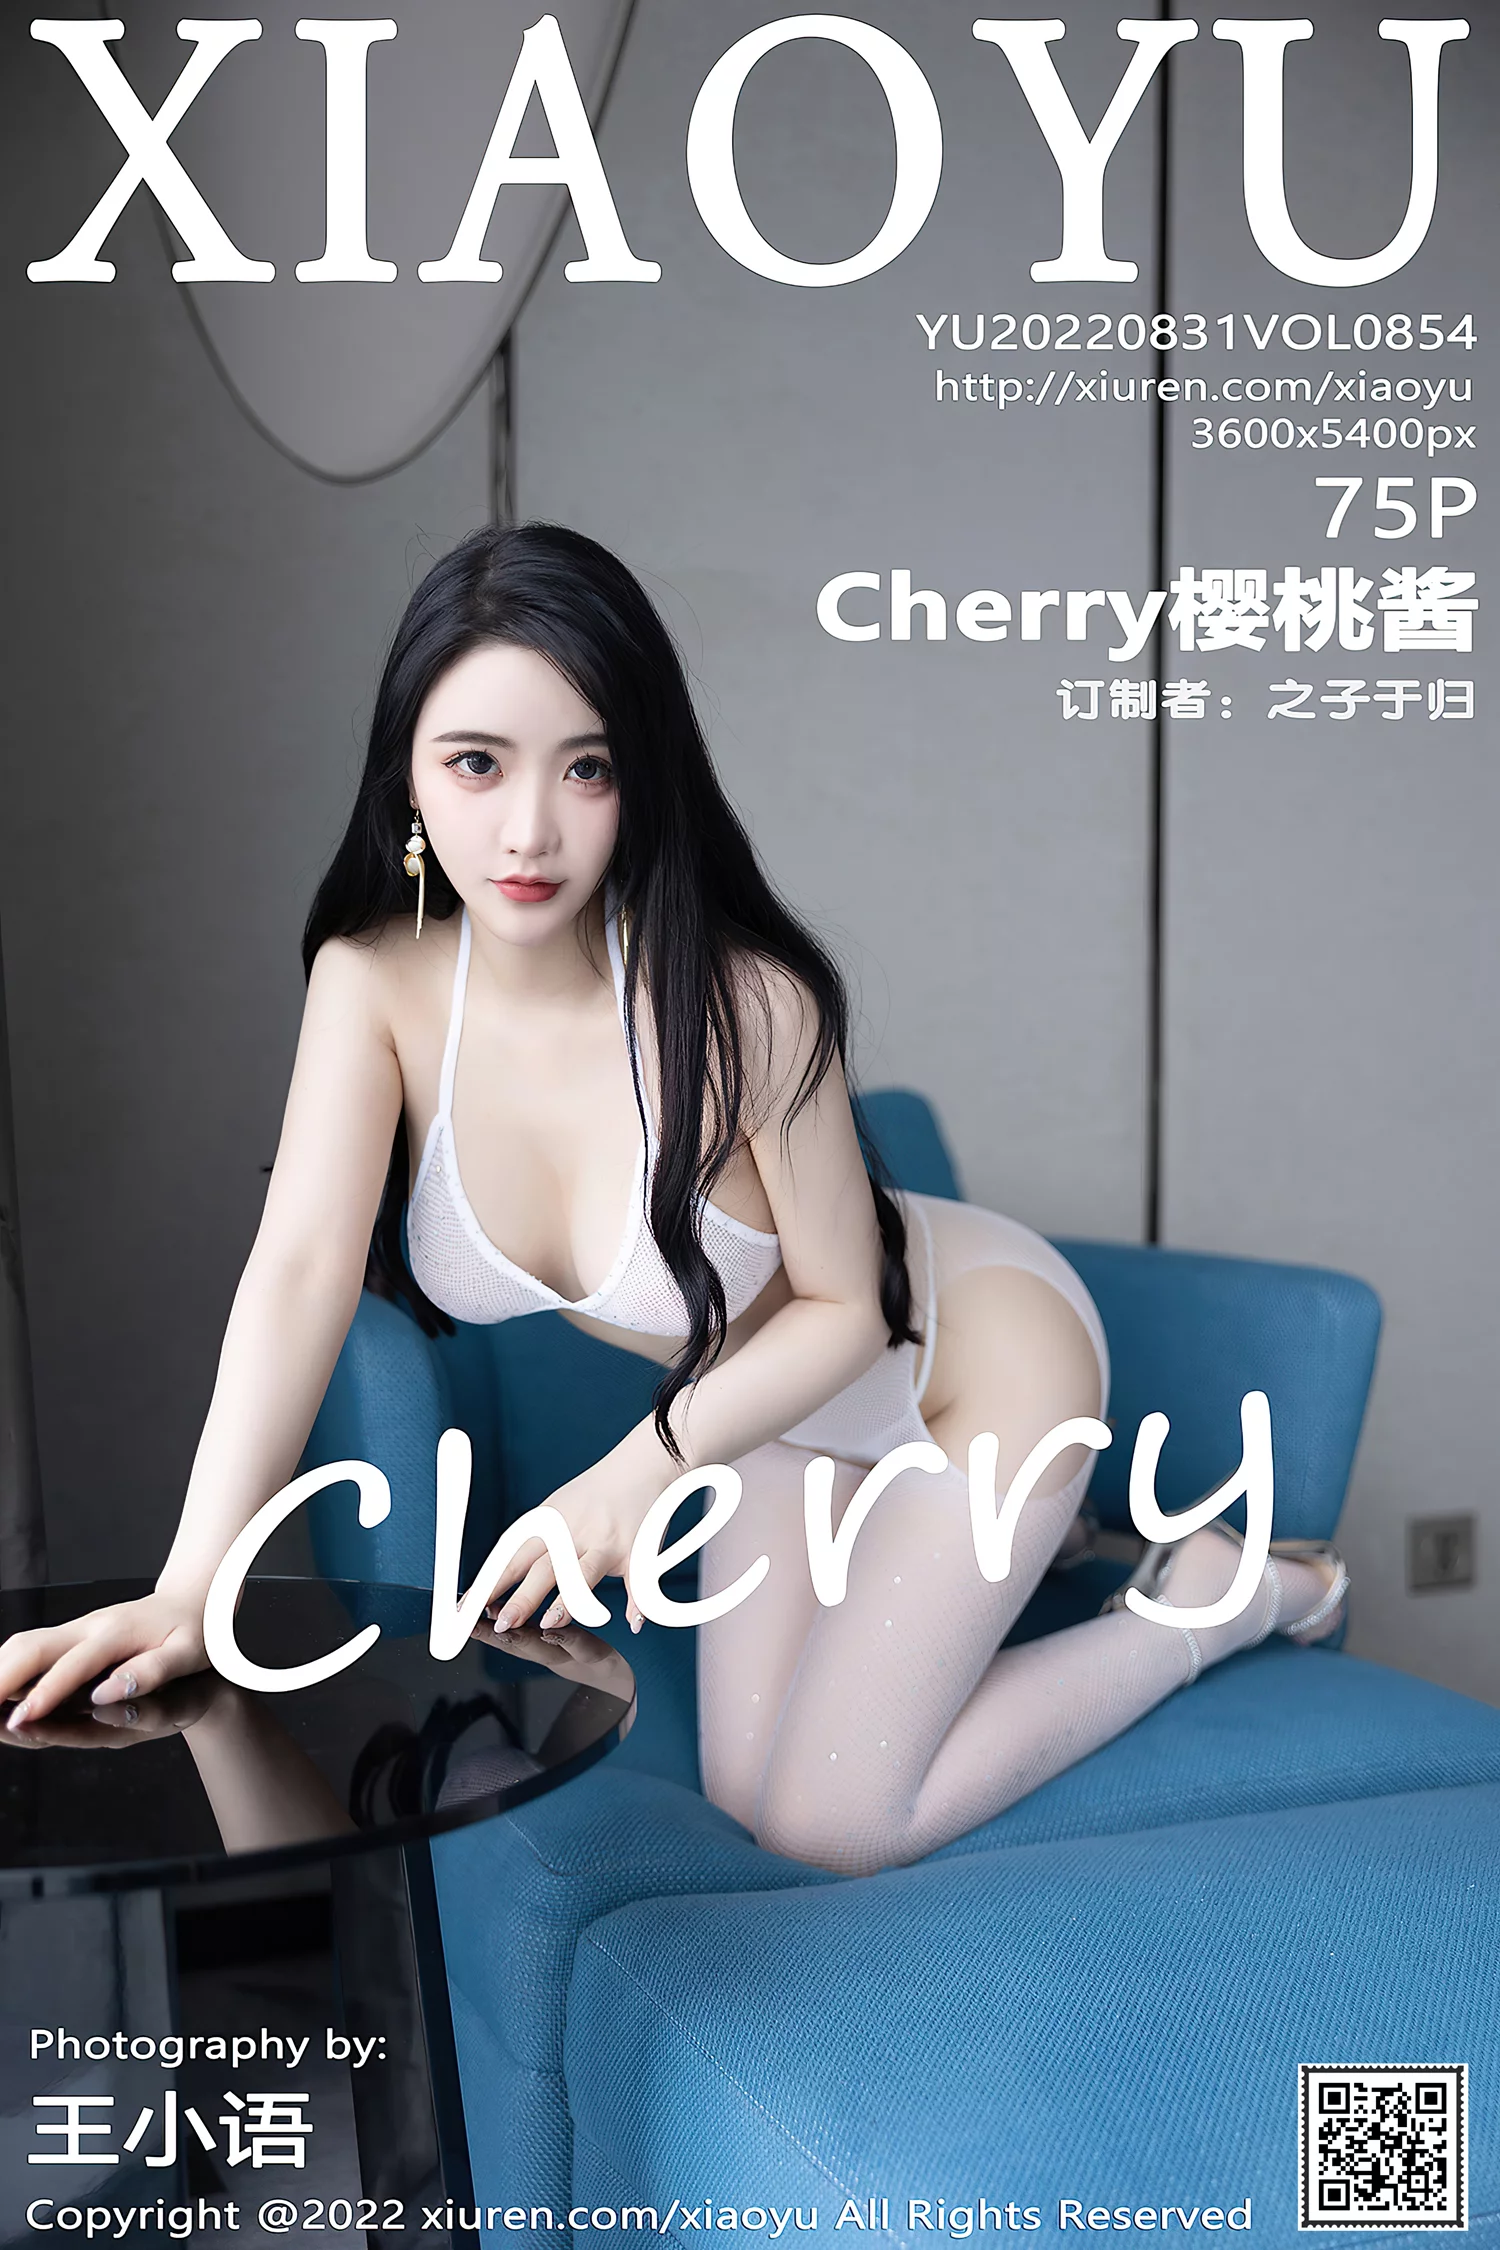 [XIAOYU语画界] 2022.08.31 VOL.854 Cherry樱桃酱 杭州旅拍[21P]第1张